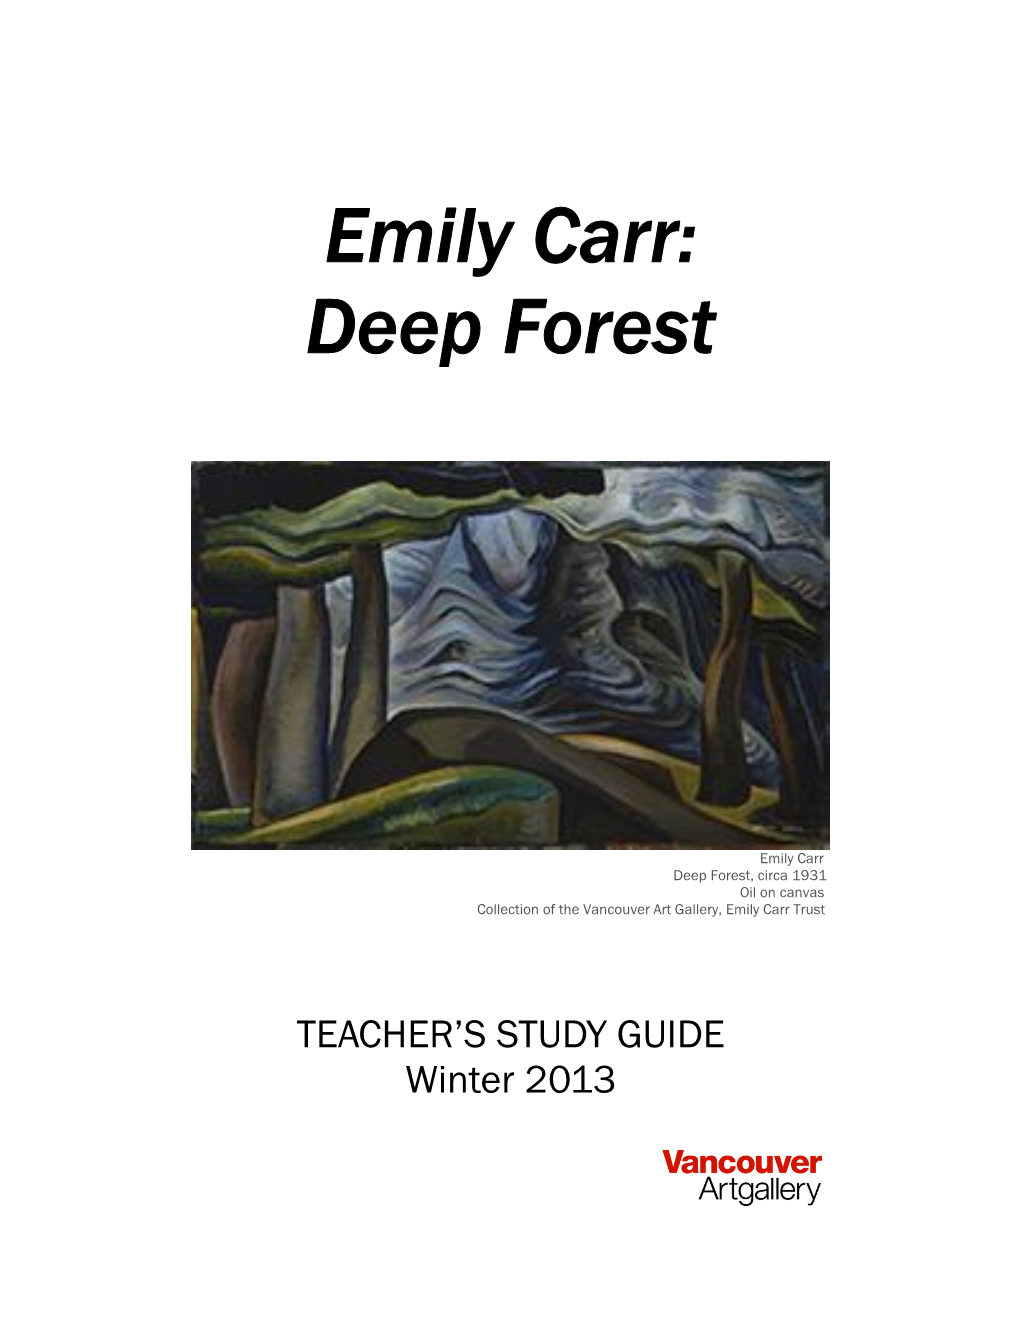 Emily Carr: Deep Forest